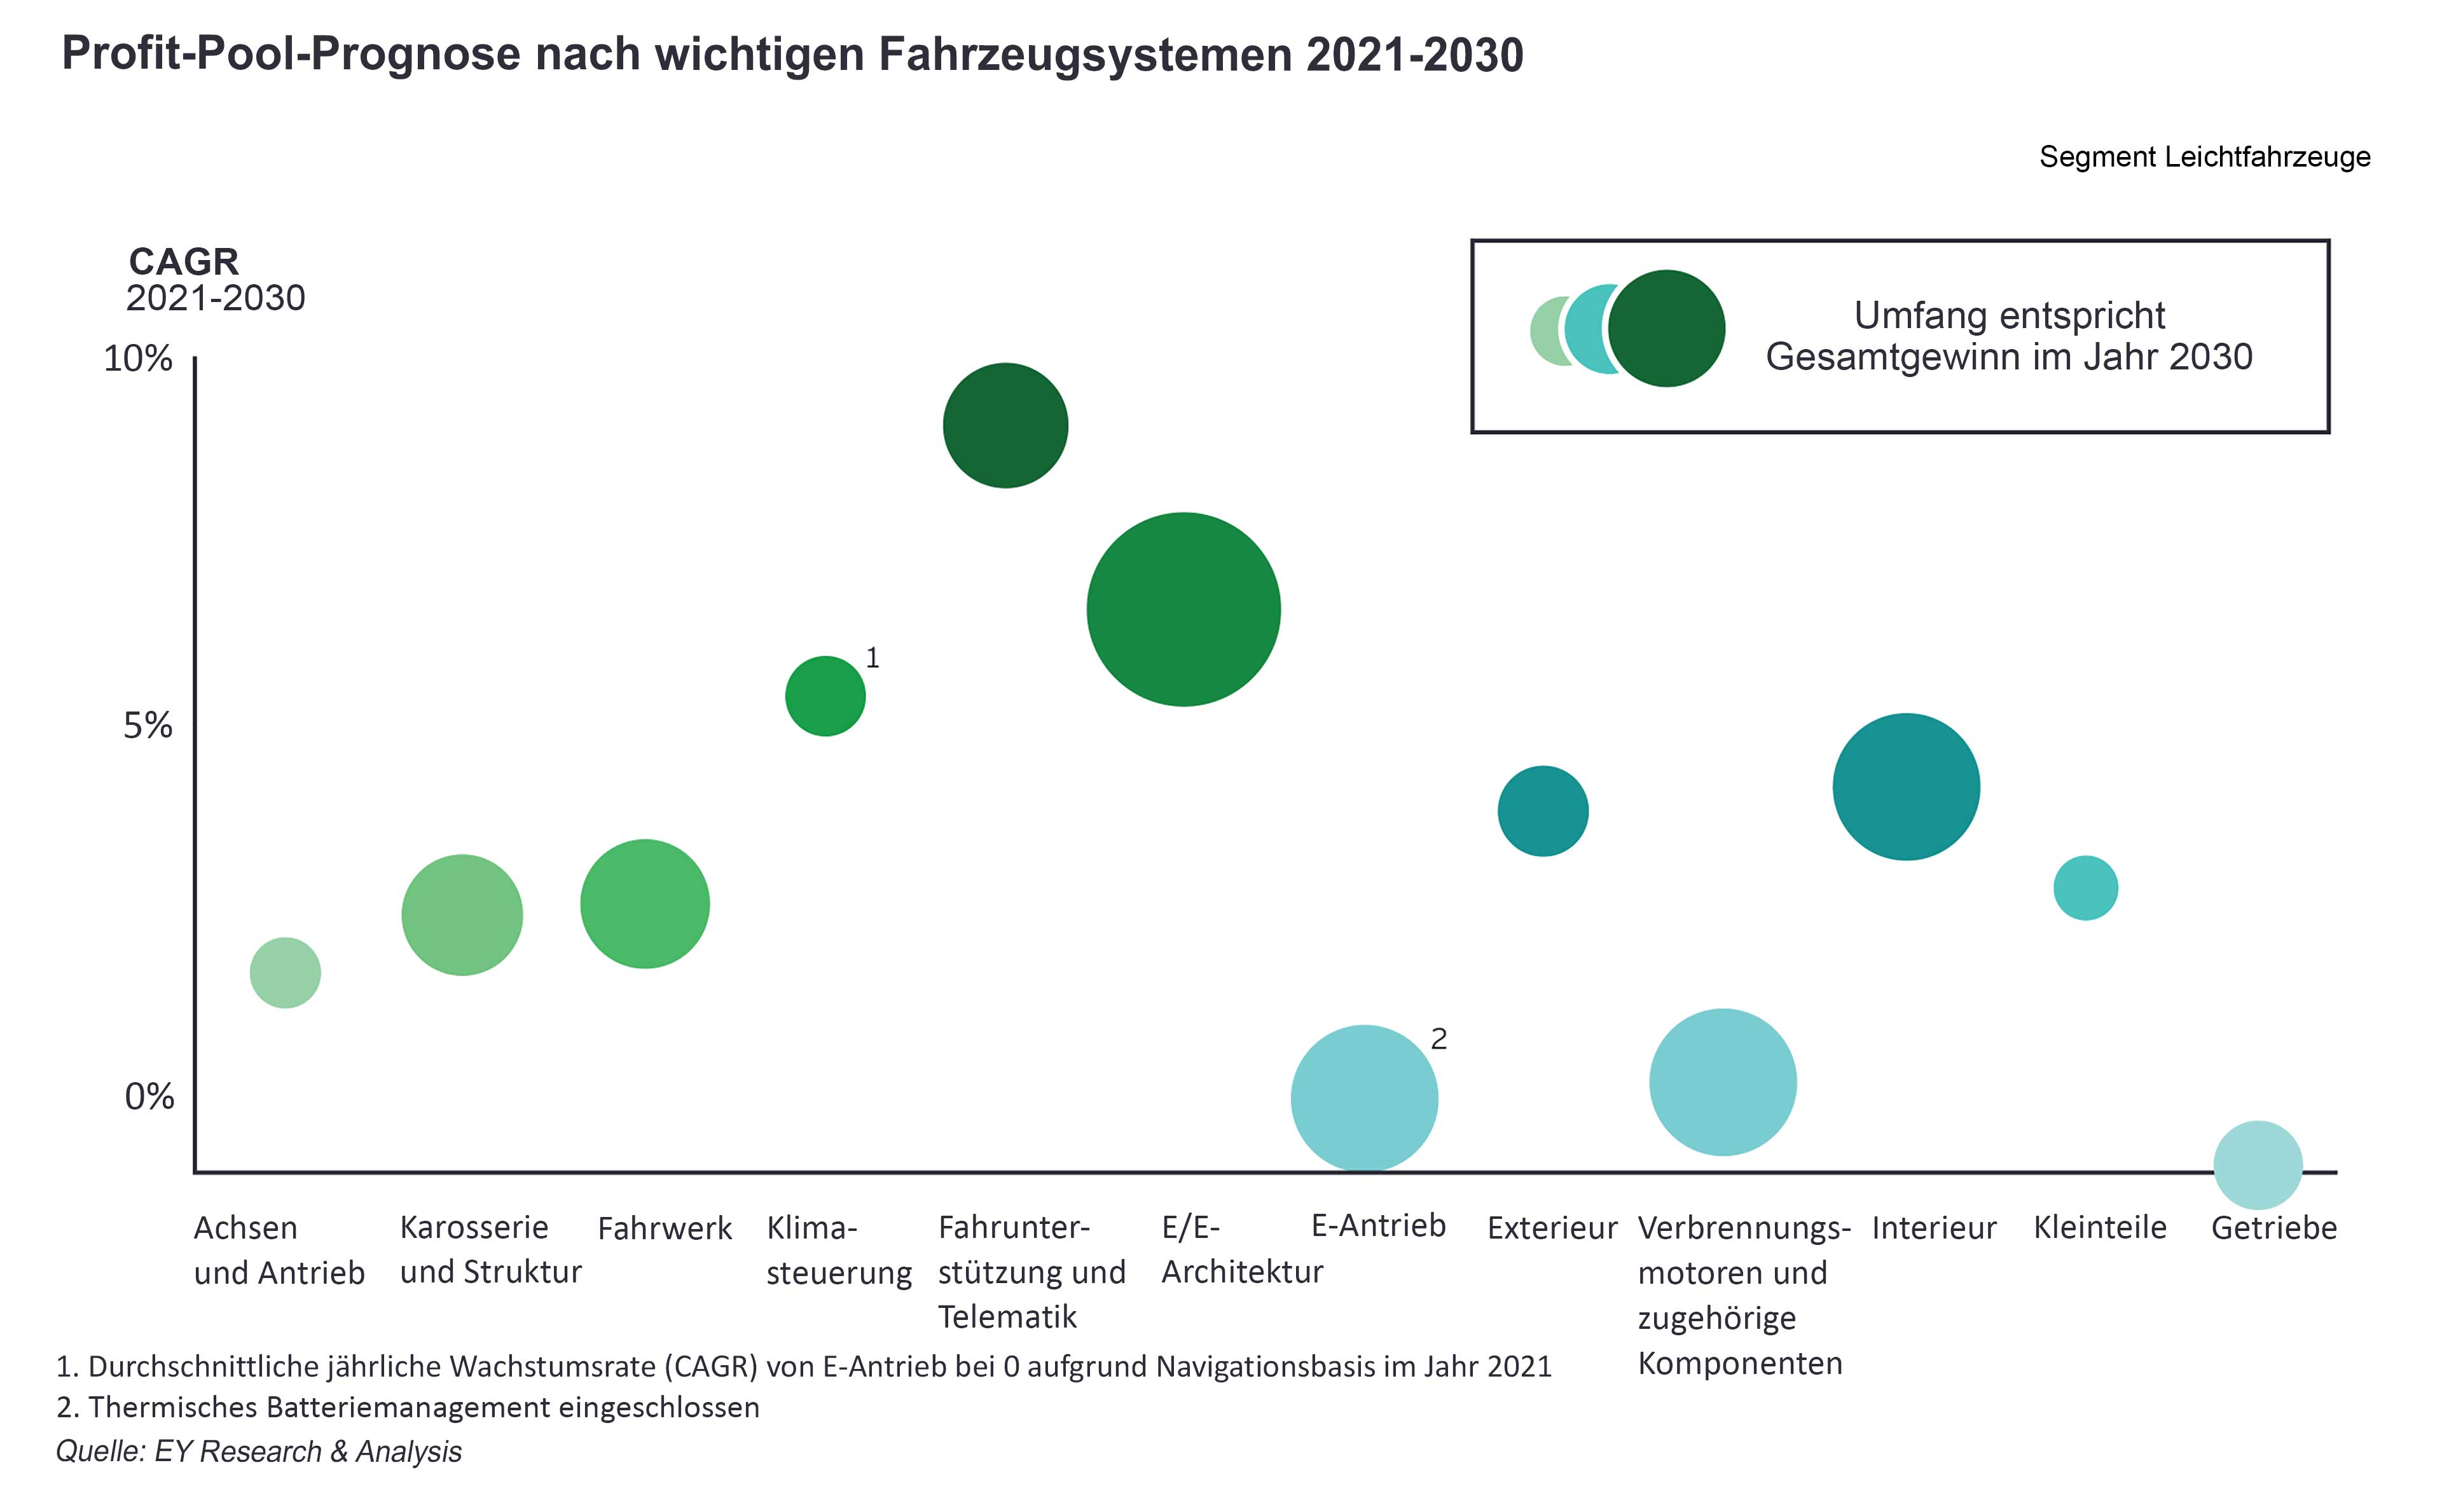 Profit-Pool-Prognose nach wichtigen Fahrzeugsystemen 2021-2030, Segment Leichtfahrzeuge